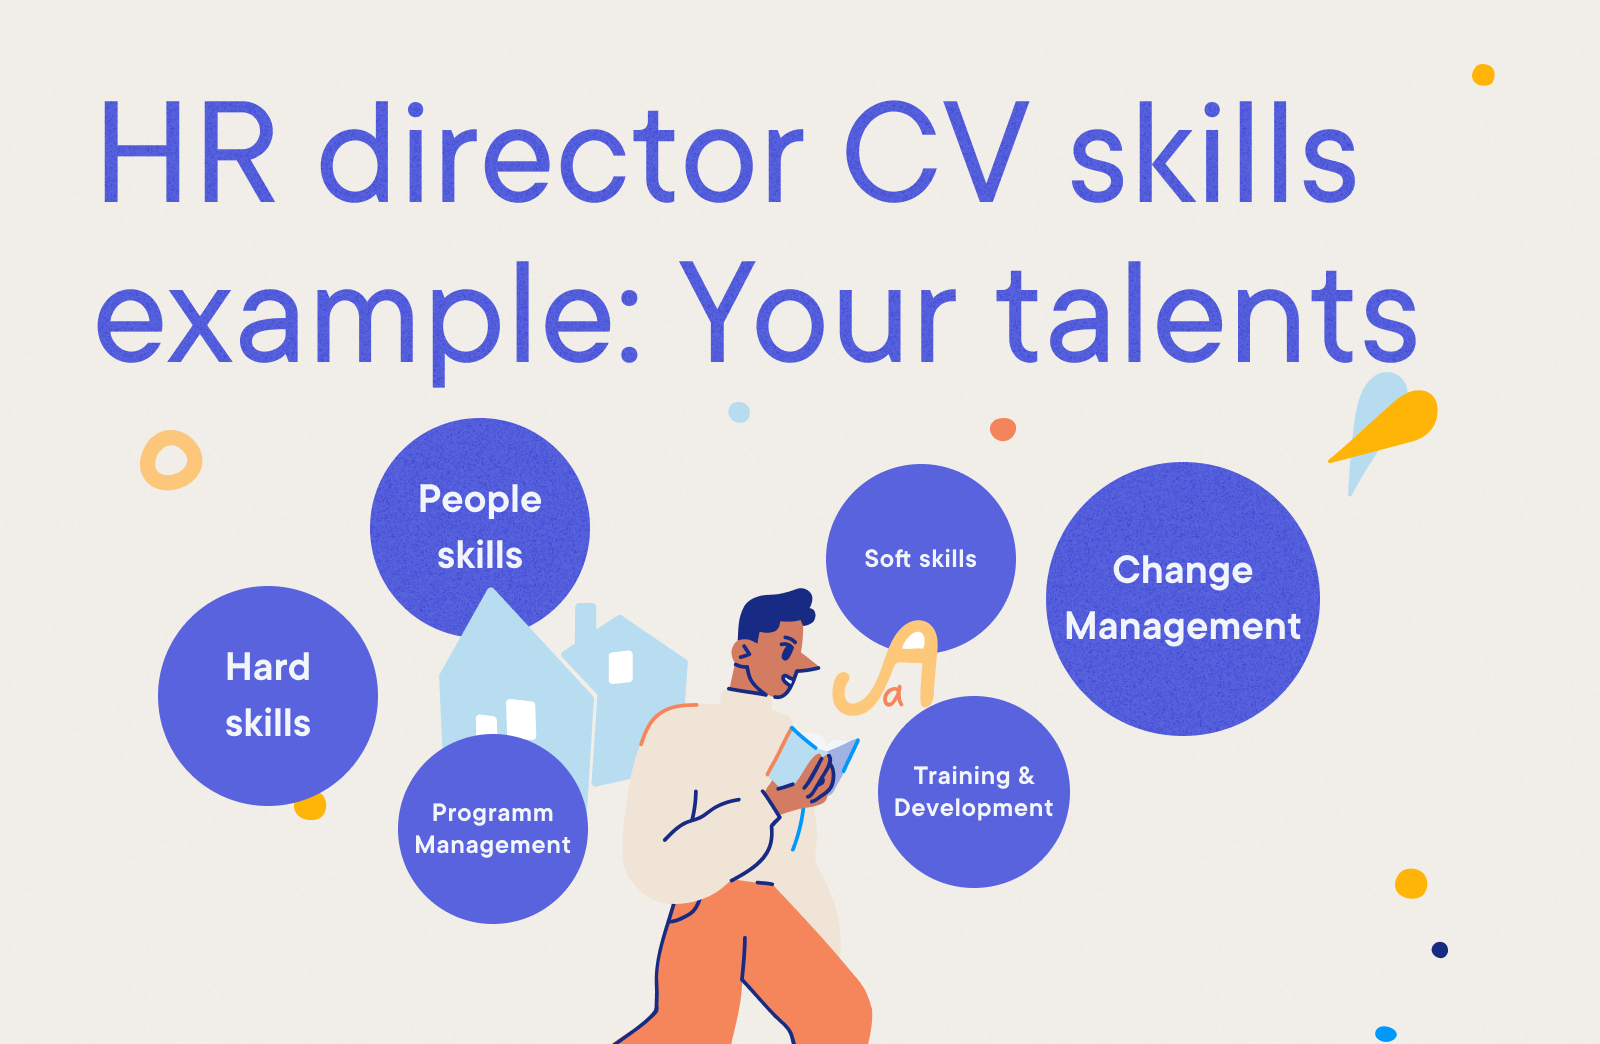 HR Director - HR director CV skills example: Your talents